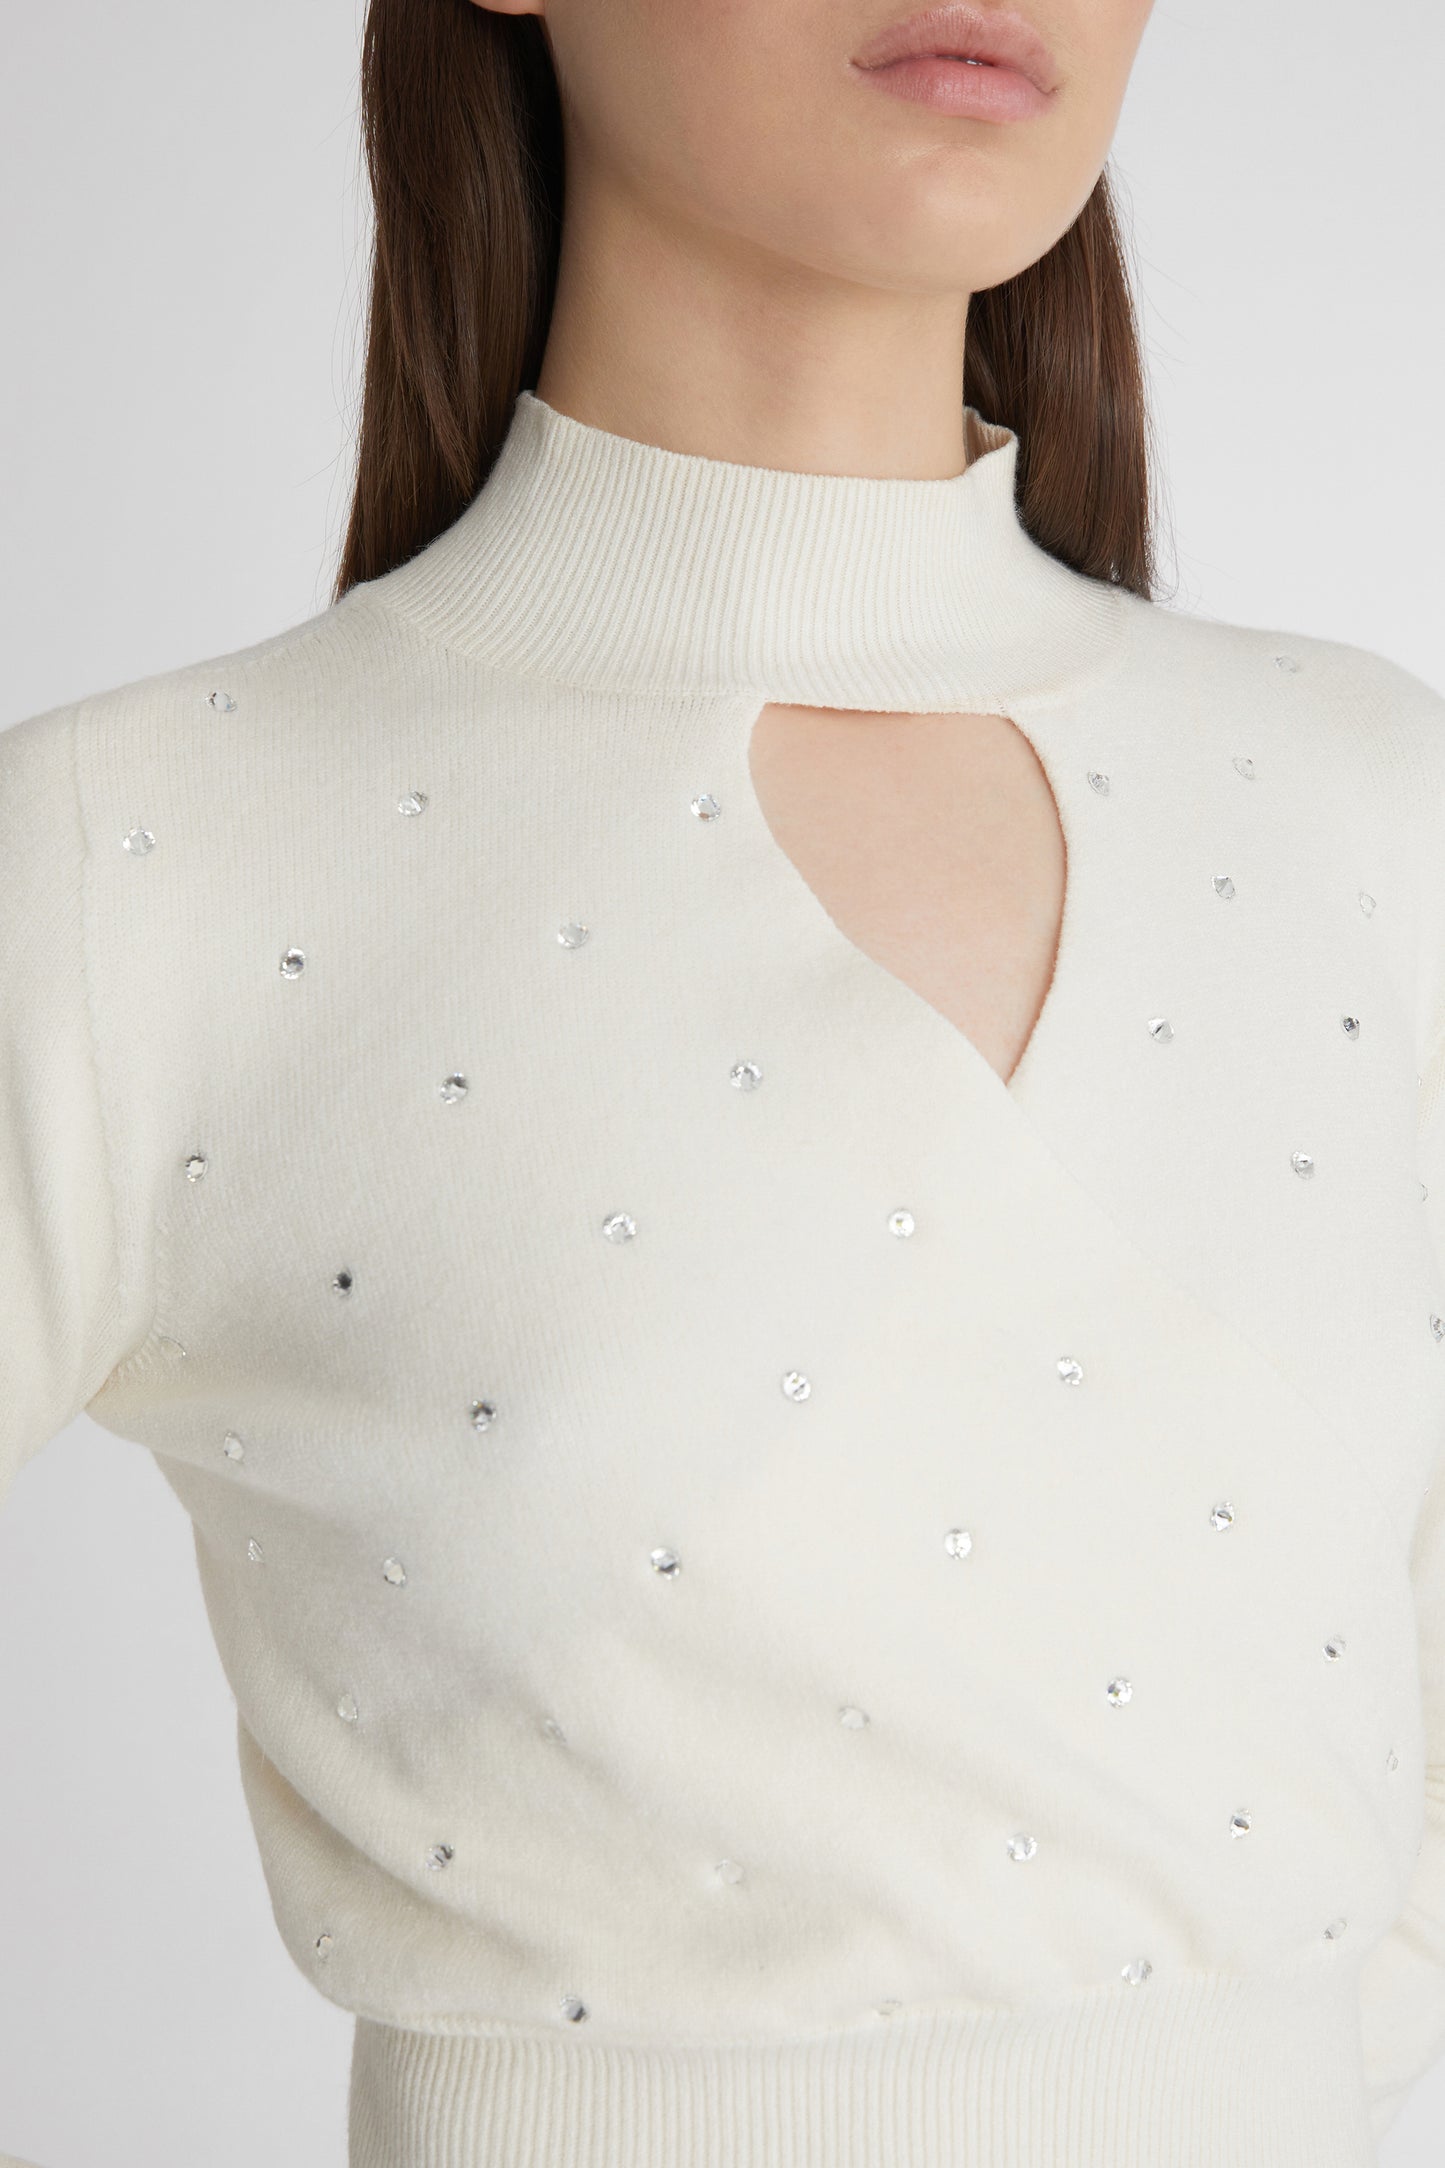 Rhinestone-adorned sweater